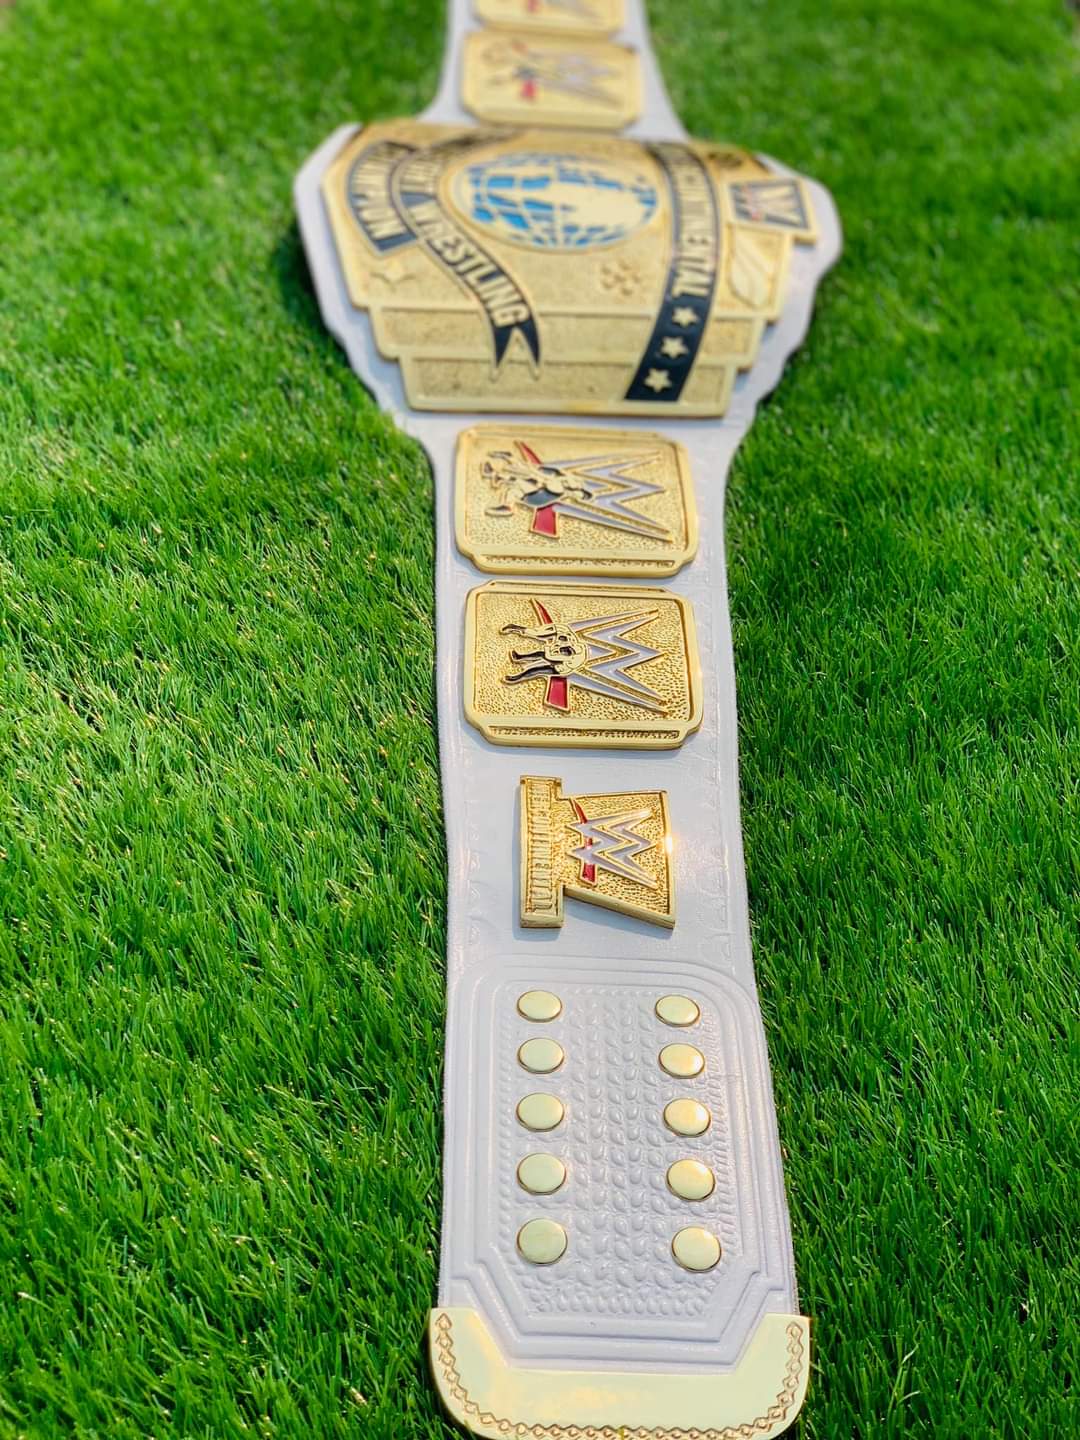 2014 WWE Intercontinental Championship Replica Title Belt